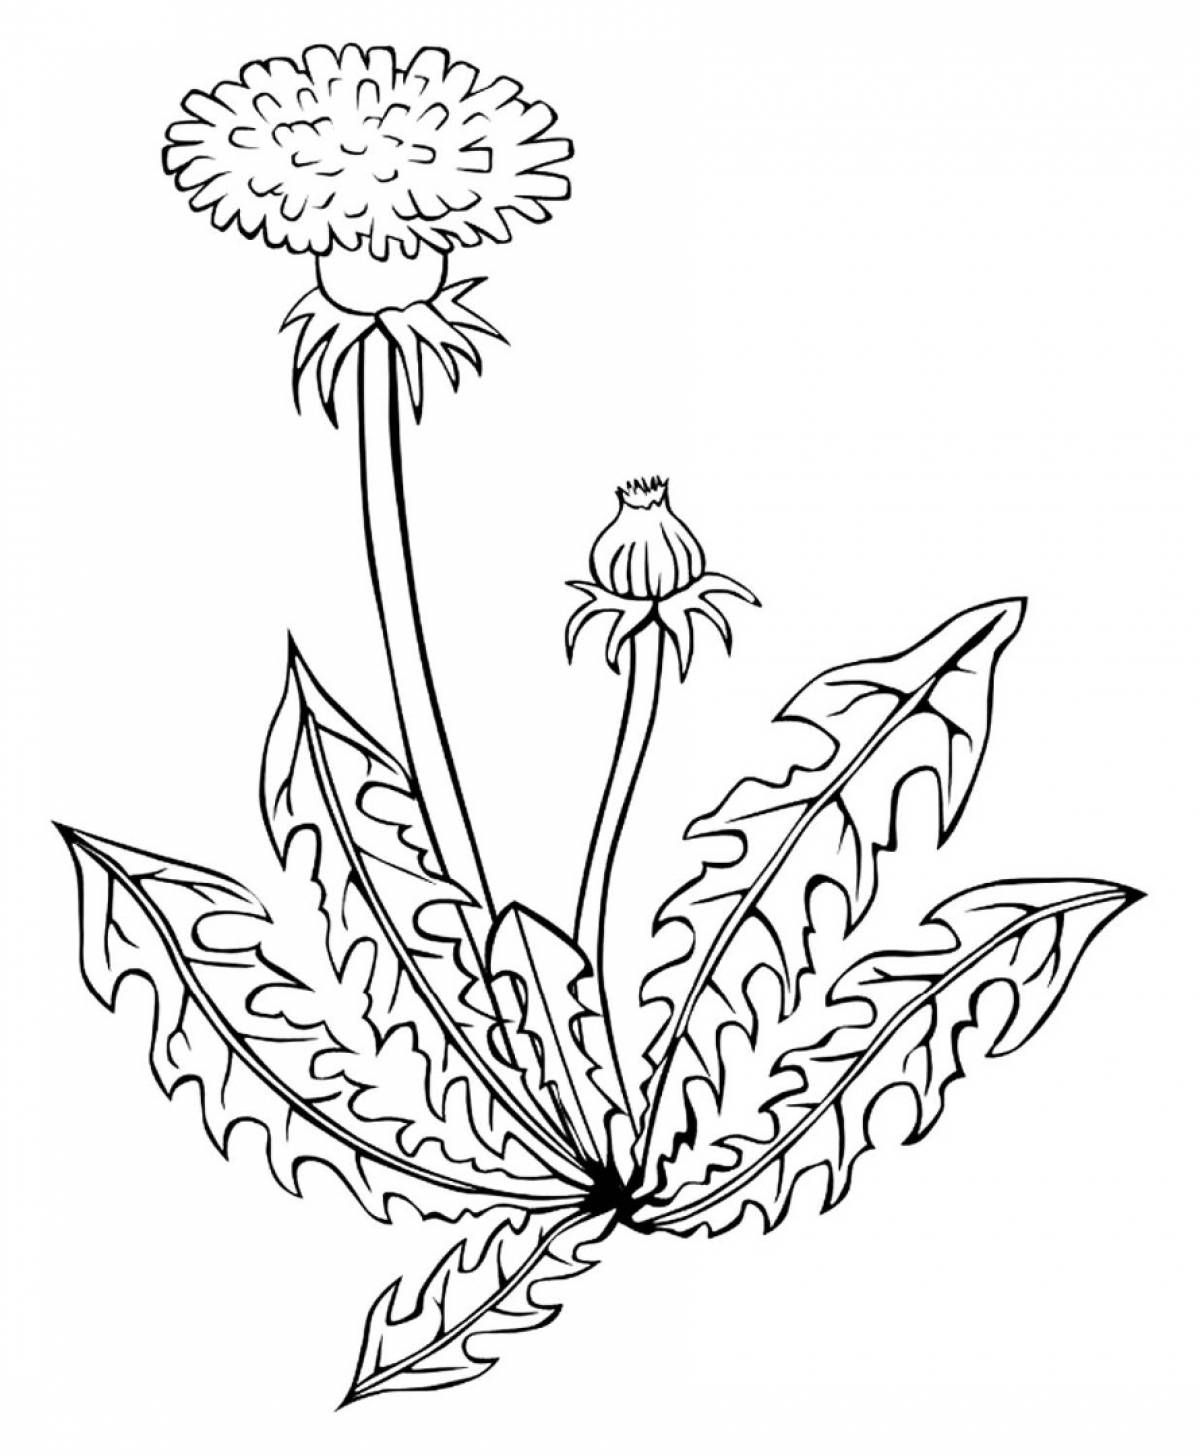 Dandelion coloring page